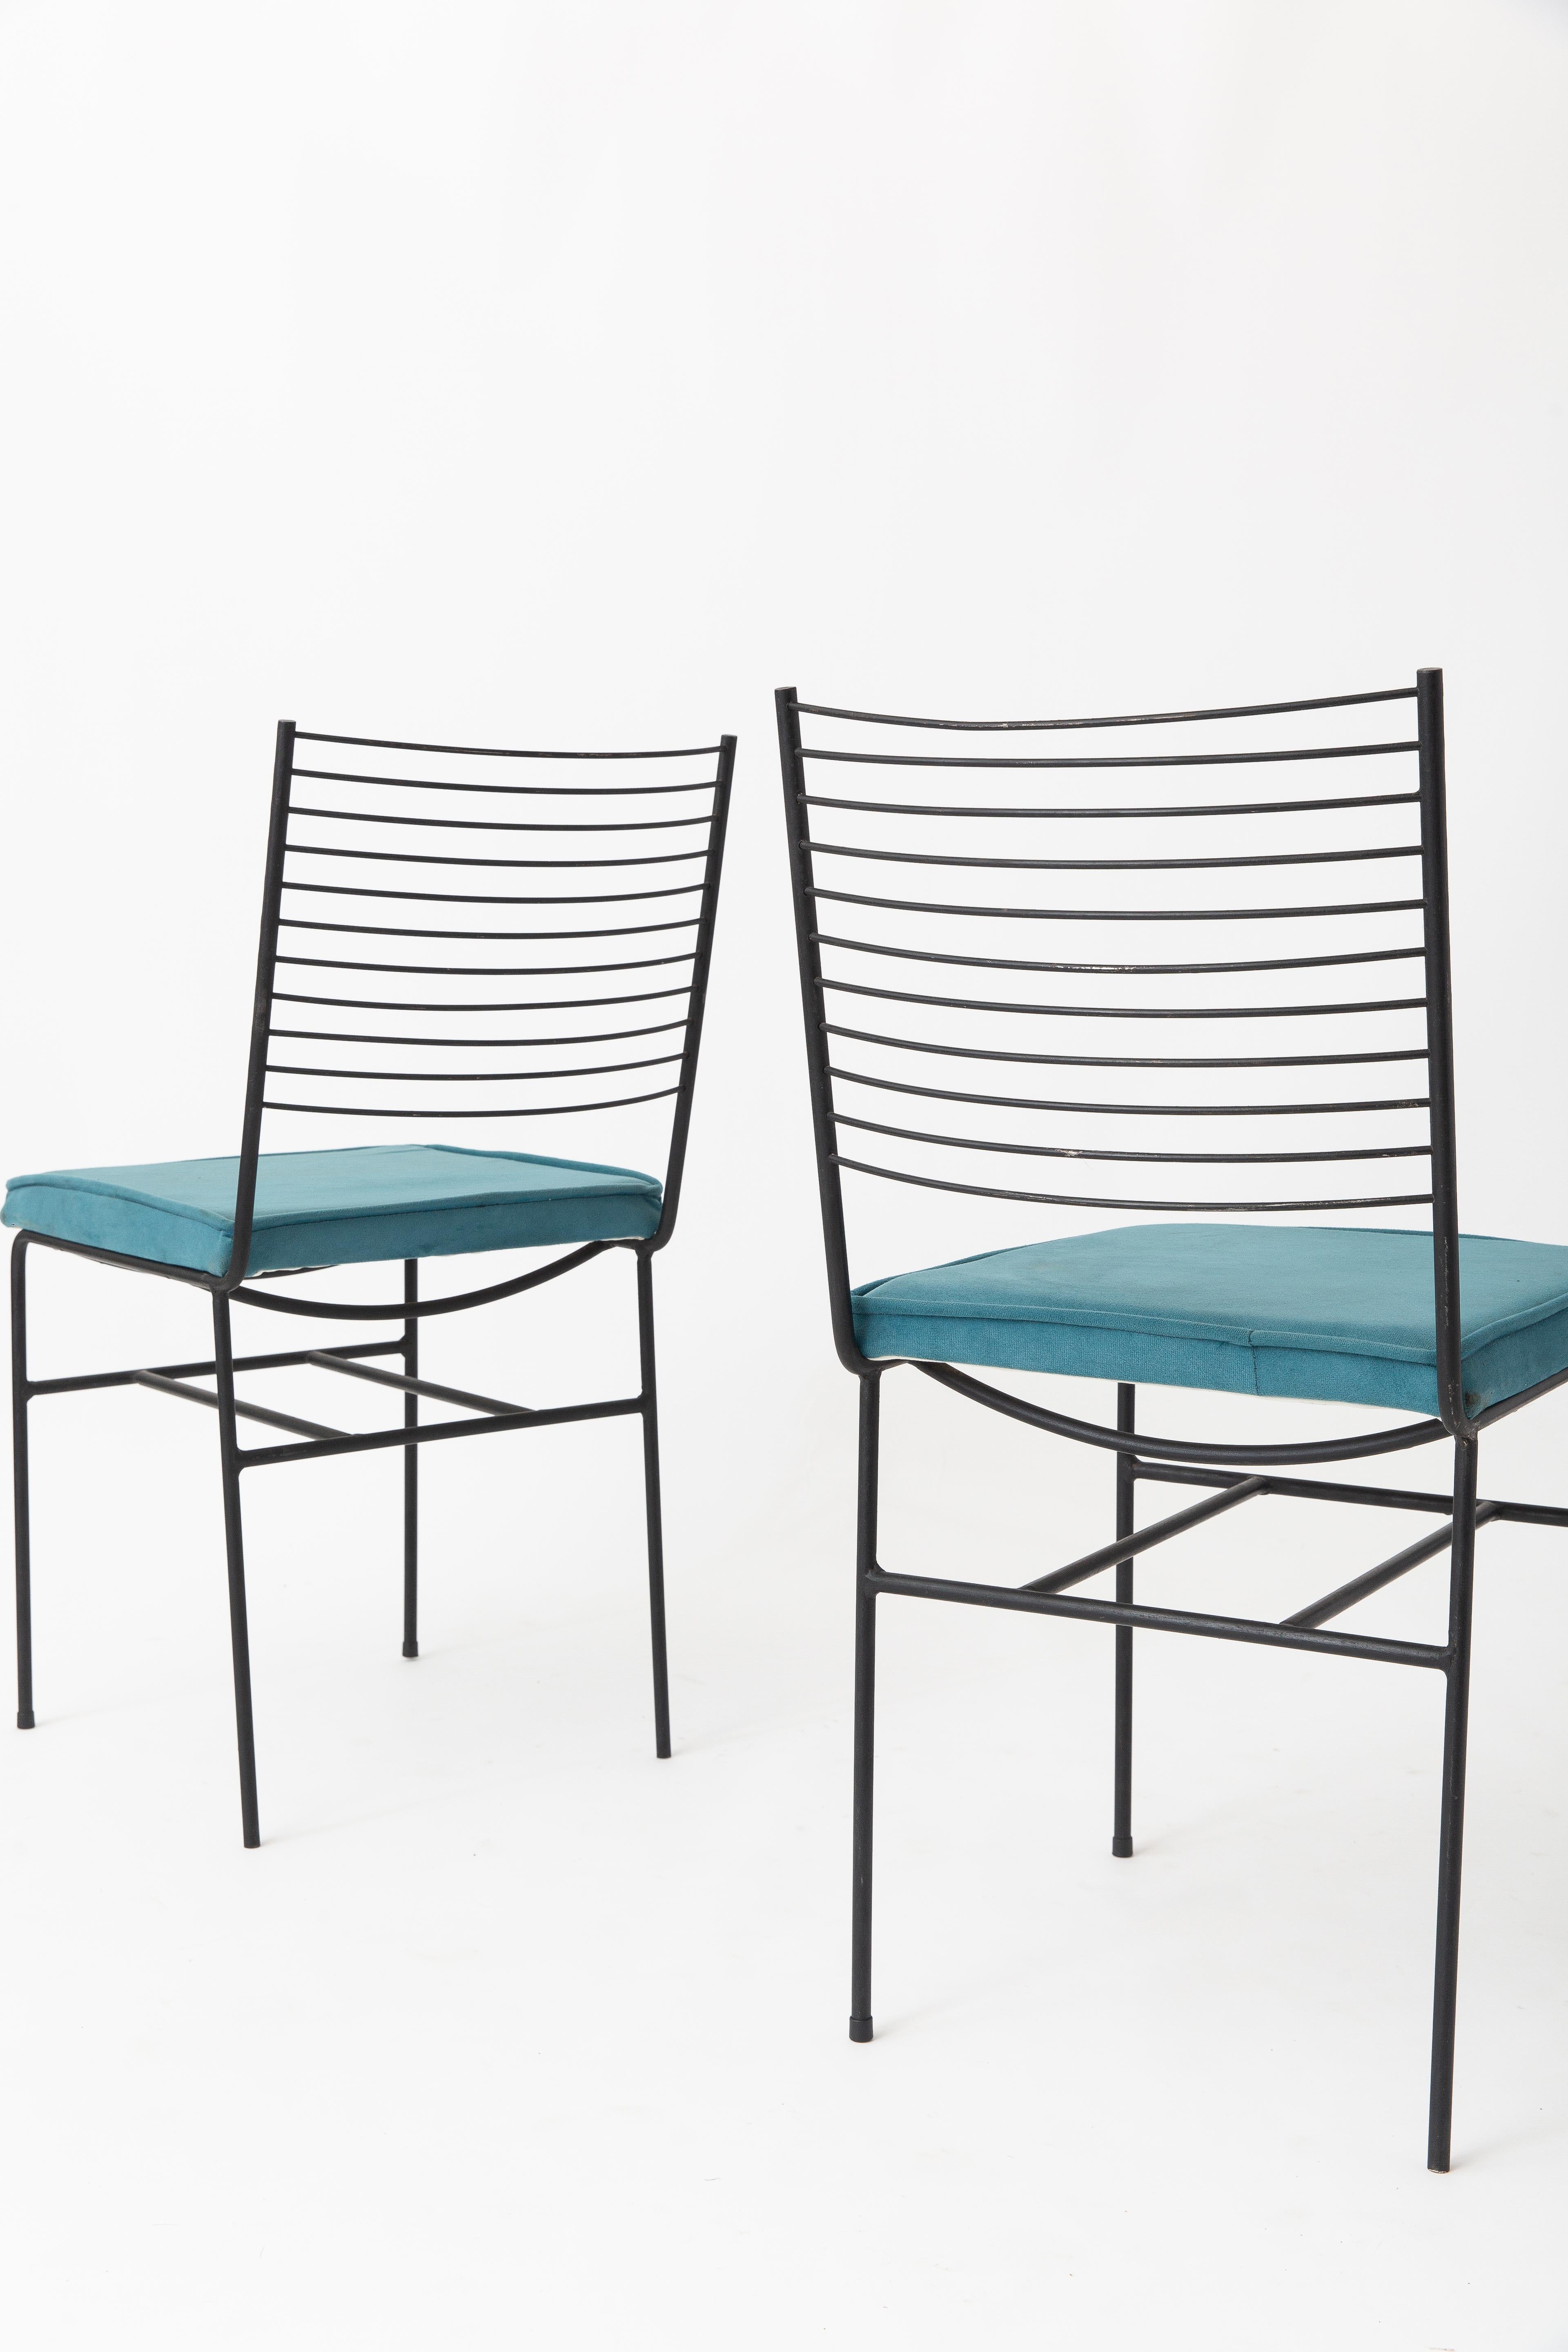 Brazilian Joaquim Tenreiro Pair of Dining Chairs For Sale